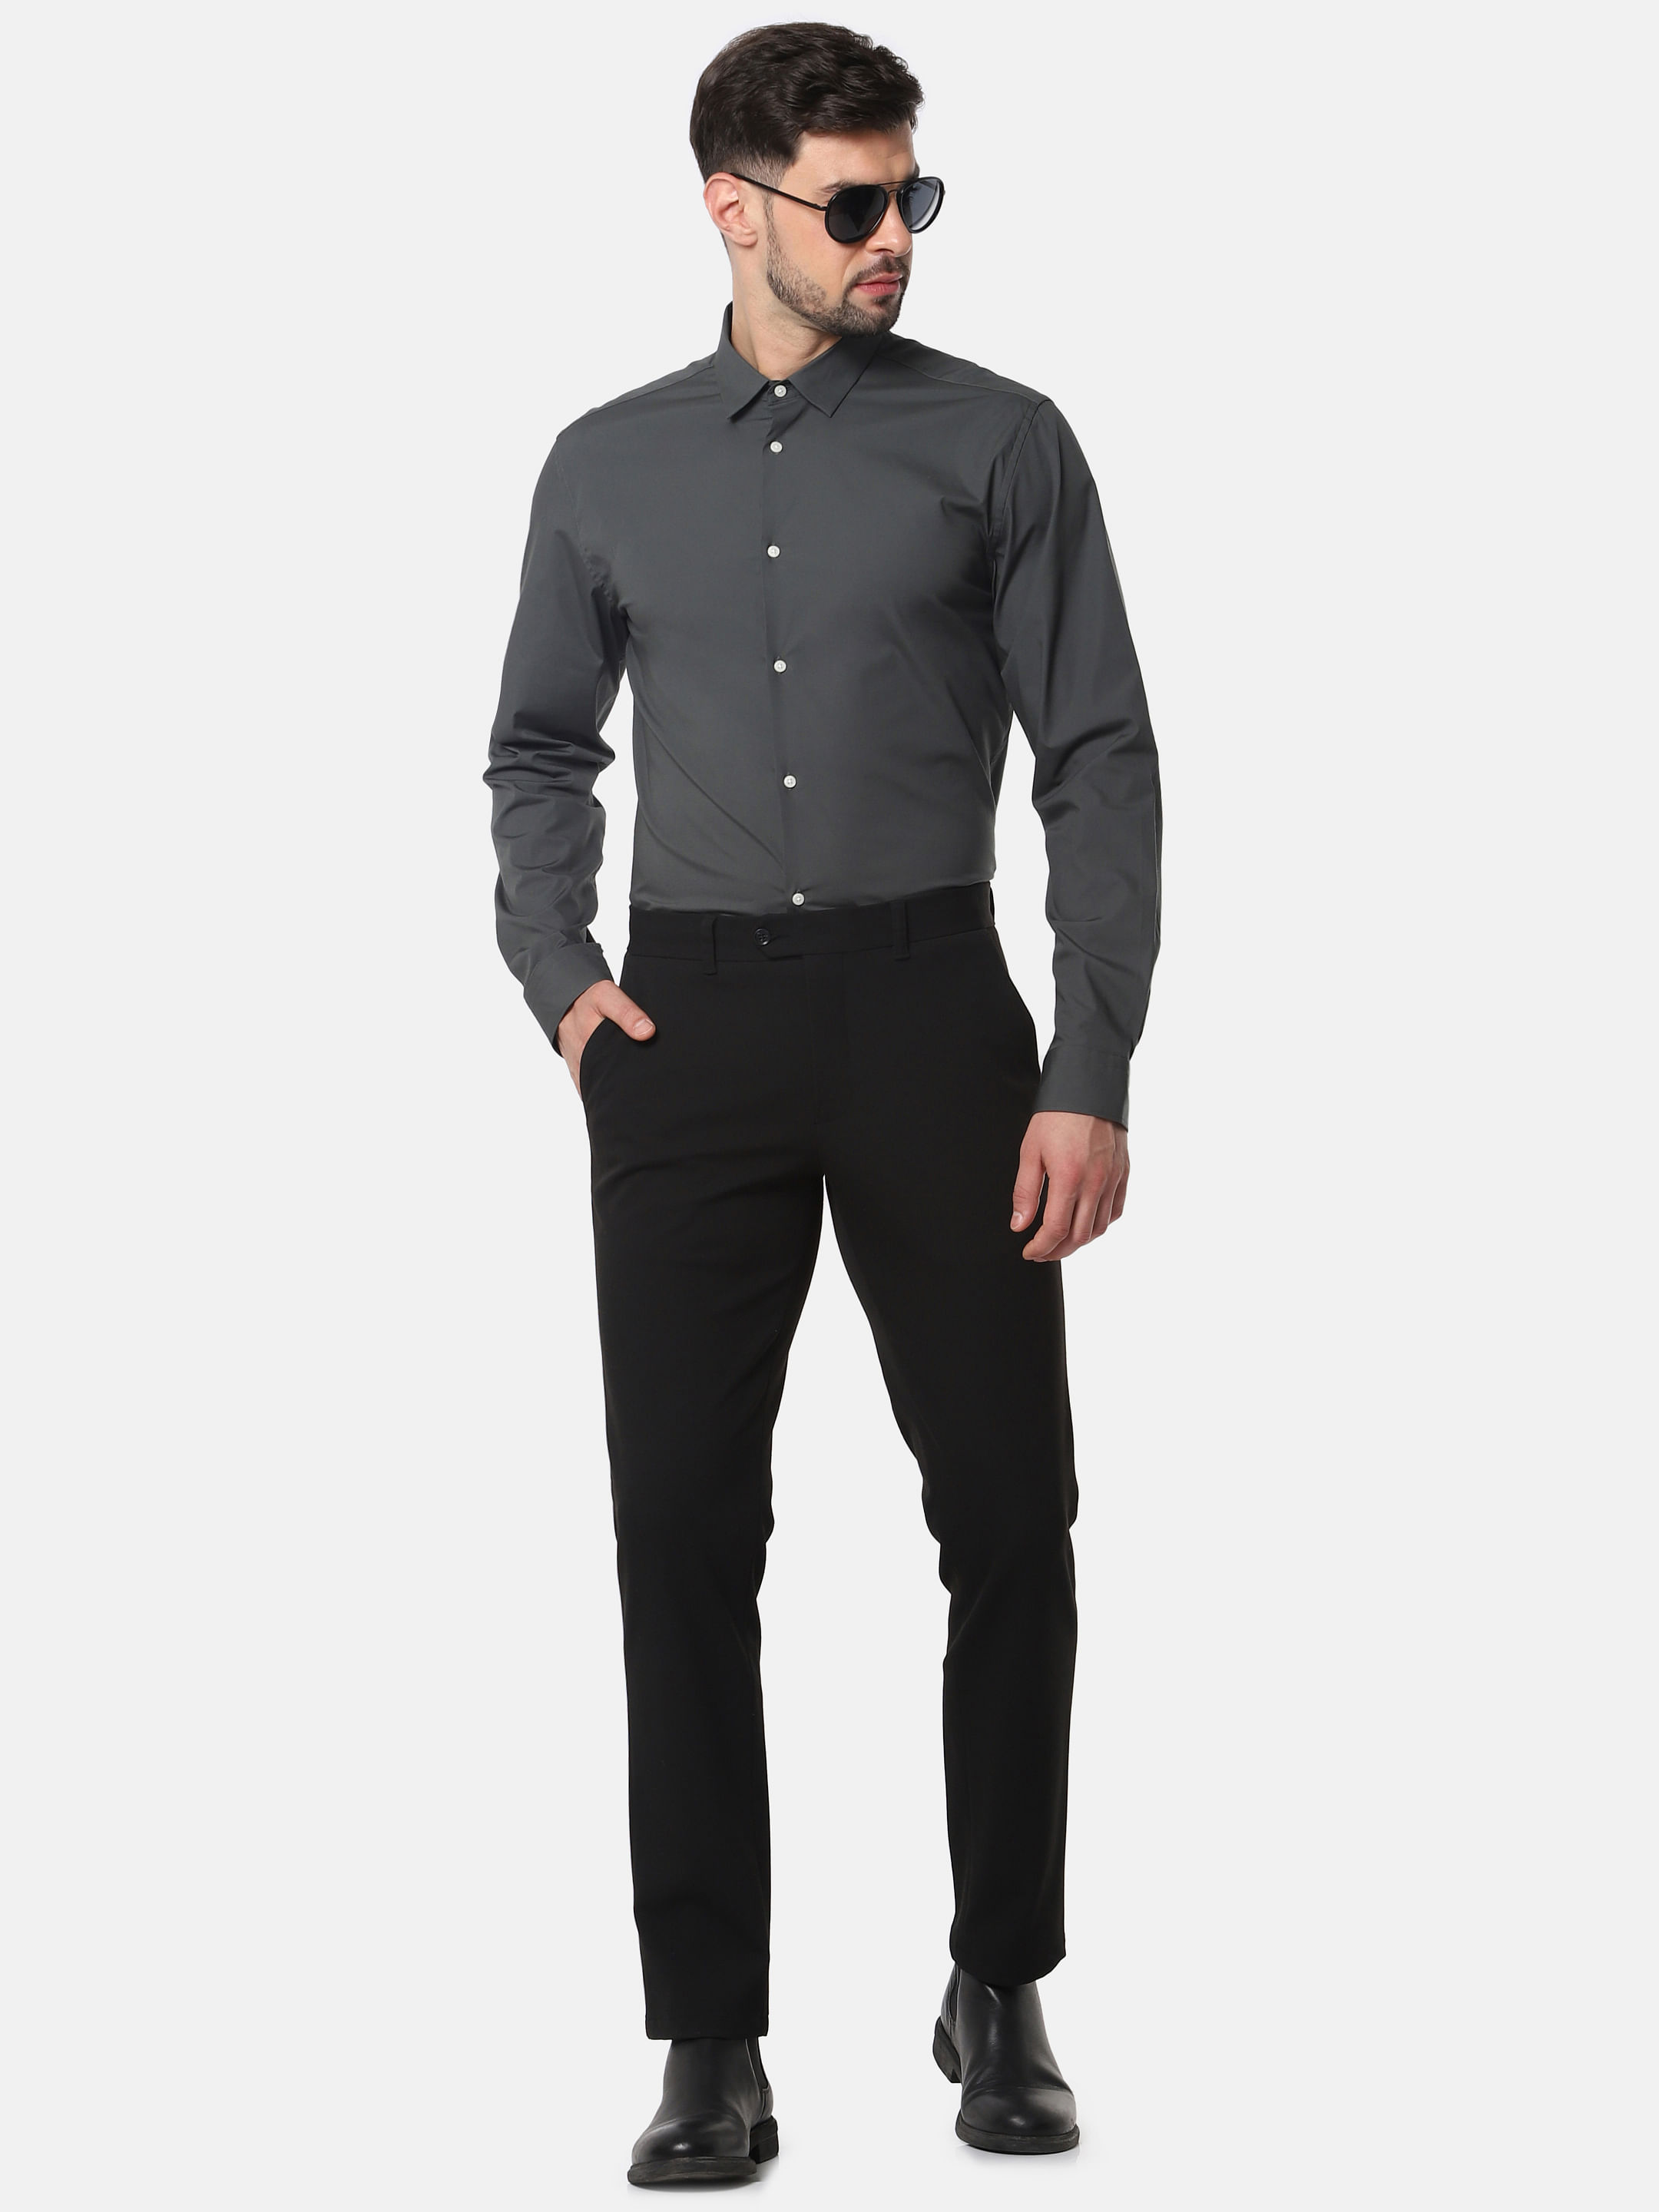 grey shirt and black pant combination